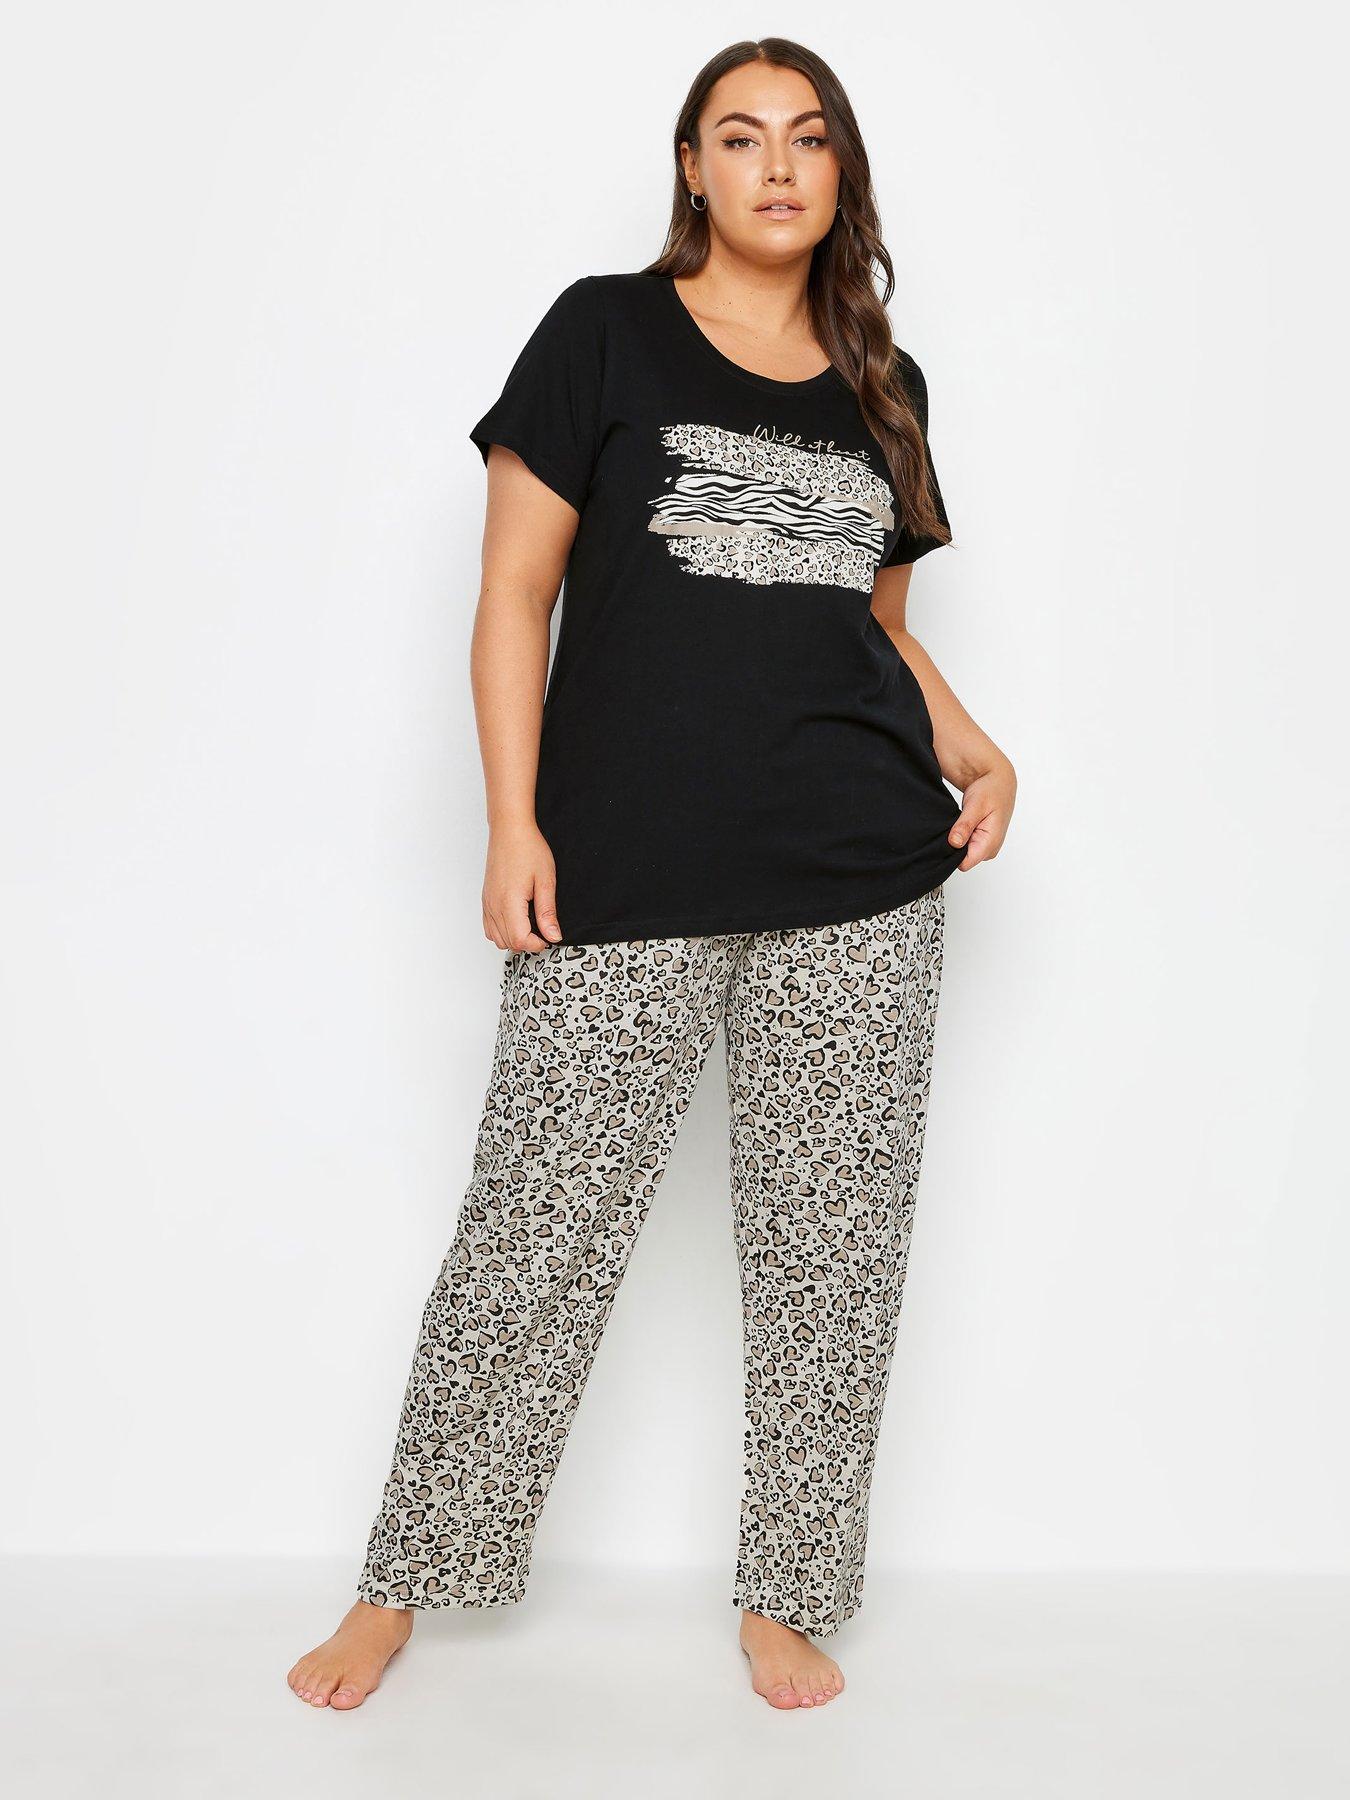 Summer Pajamas Girl's Cotton Short Sleeve Slim Sleepwear Large Size T-shirt  + Cropped Pants Two